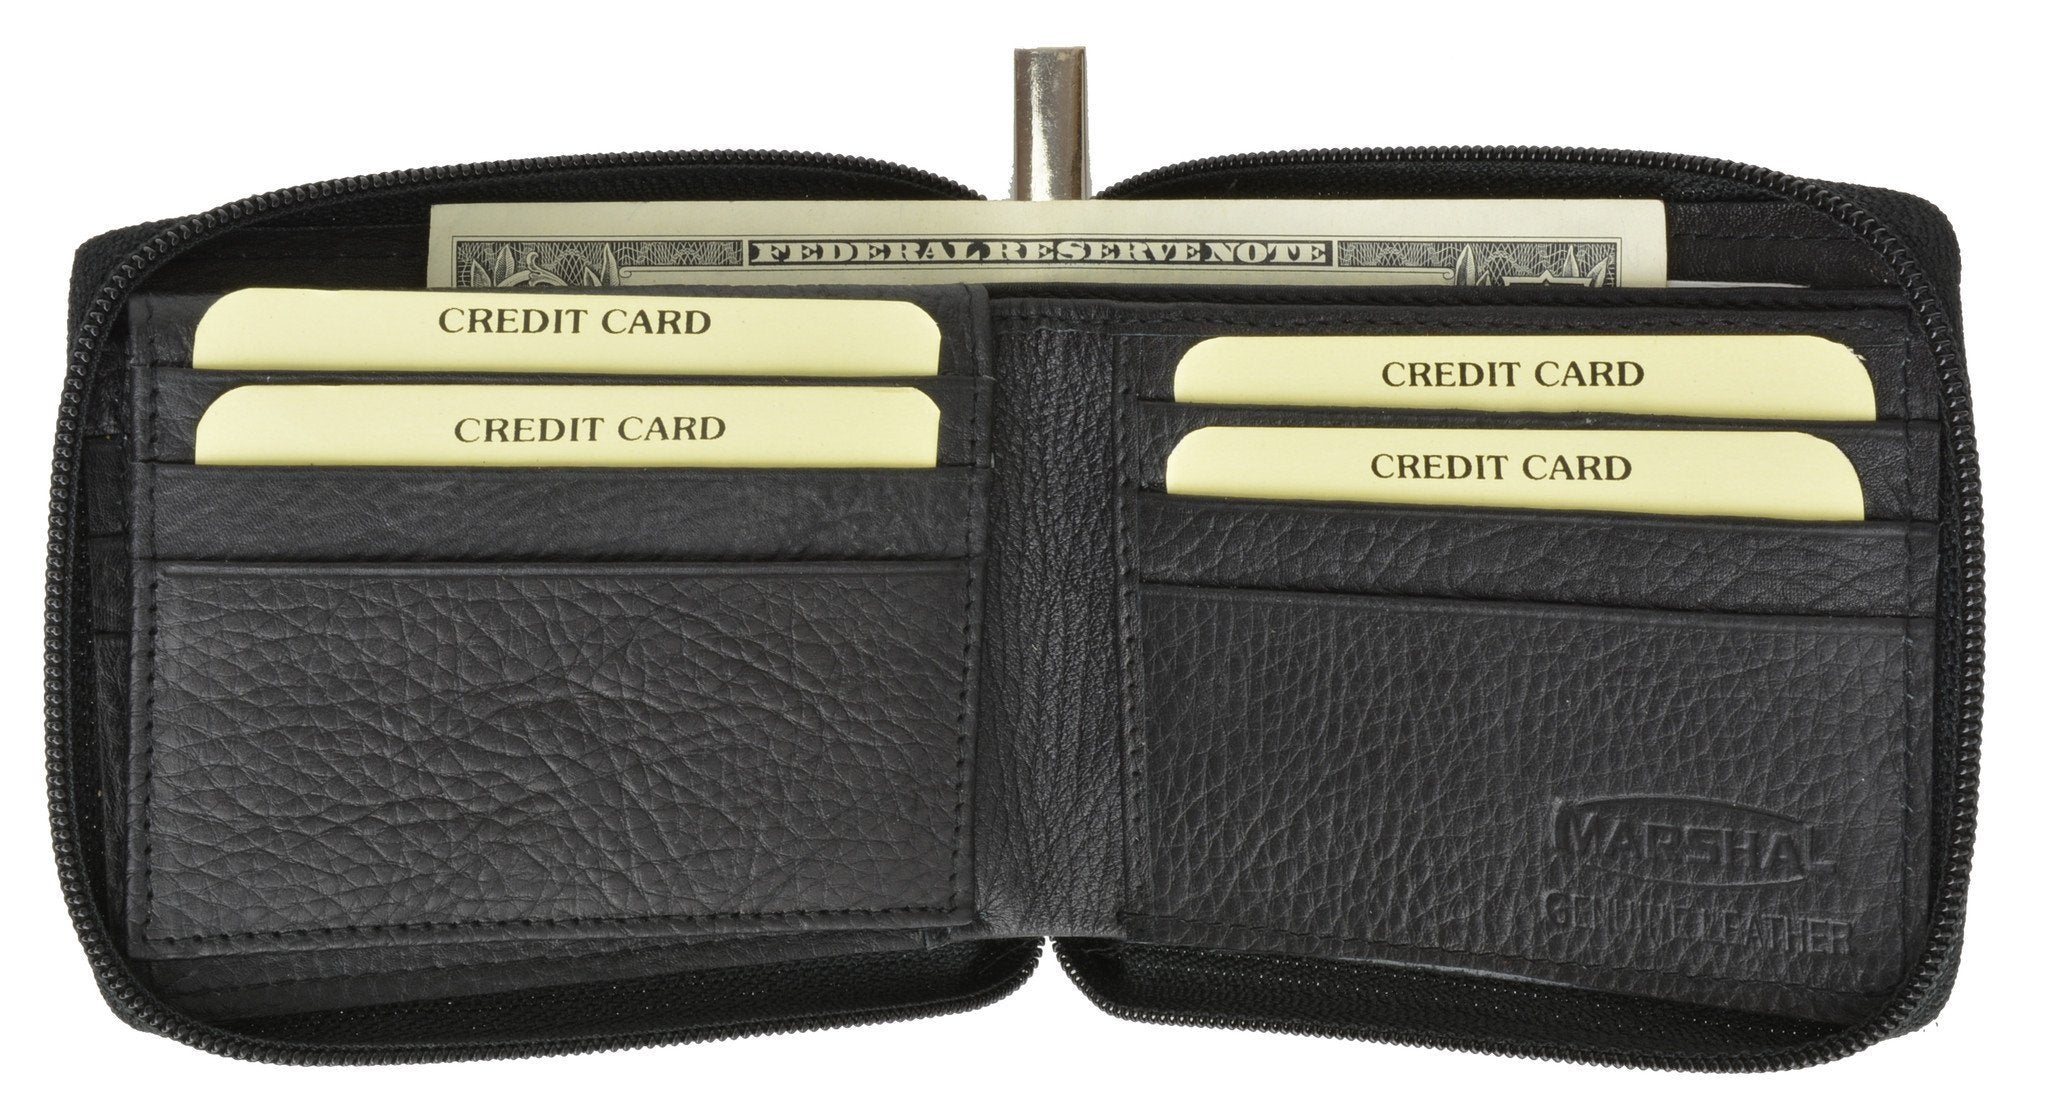 Men's premium Leather Quality Wallet